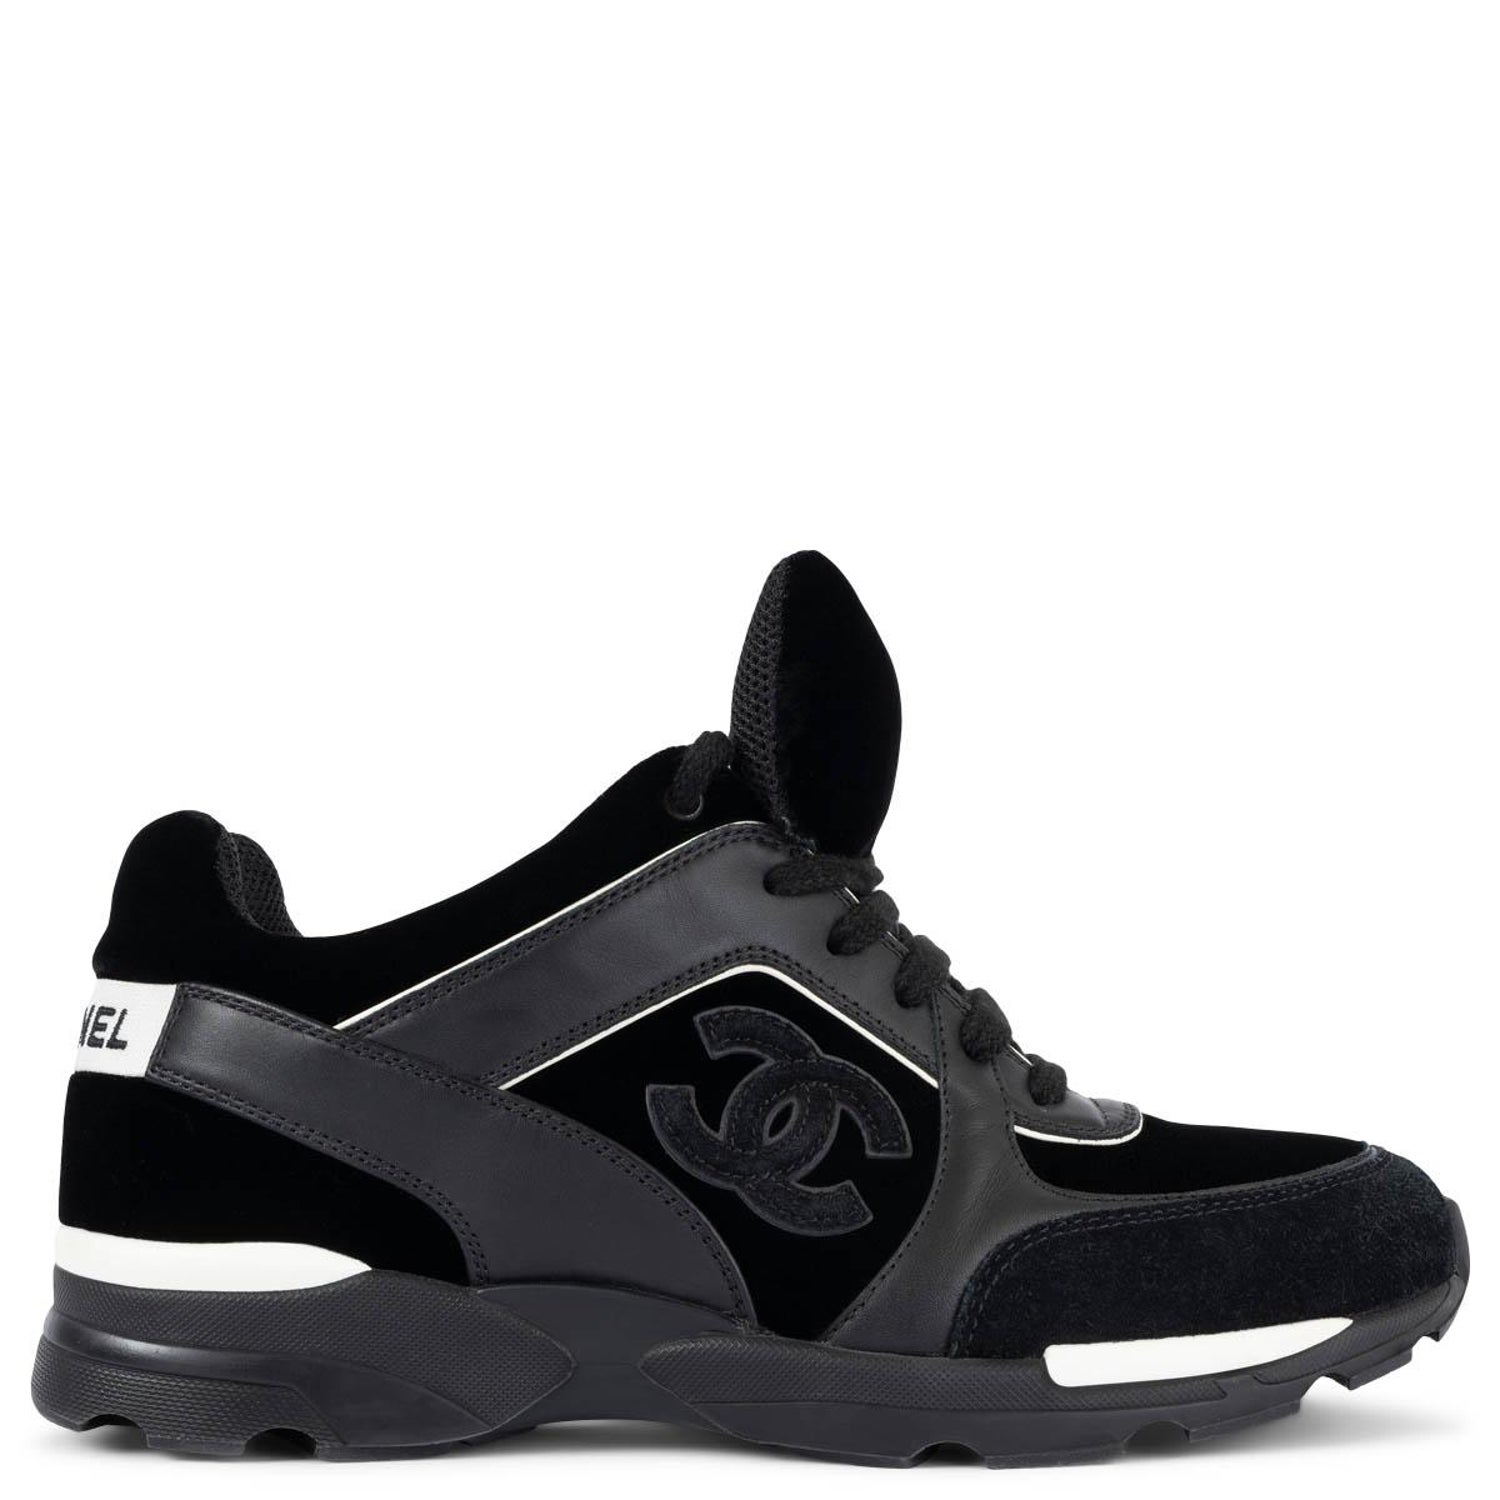 chanel sneakers black white